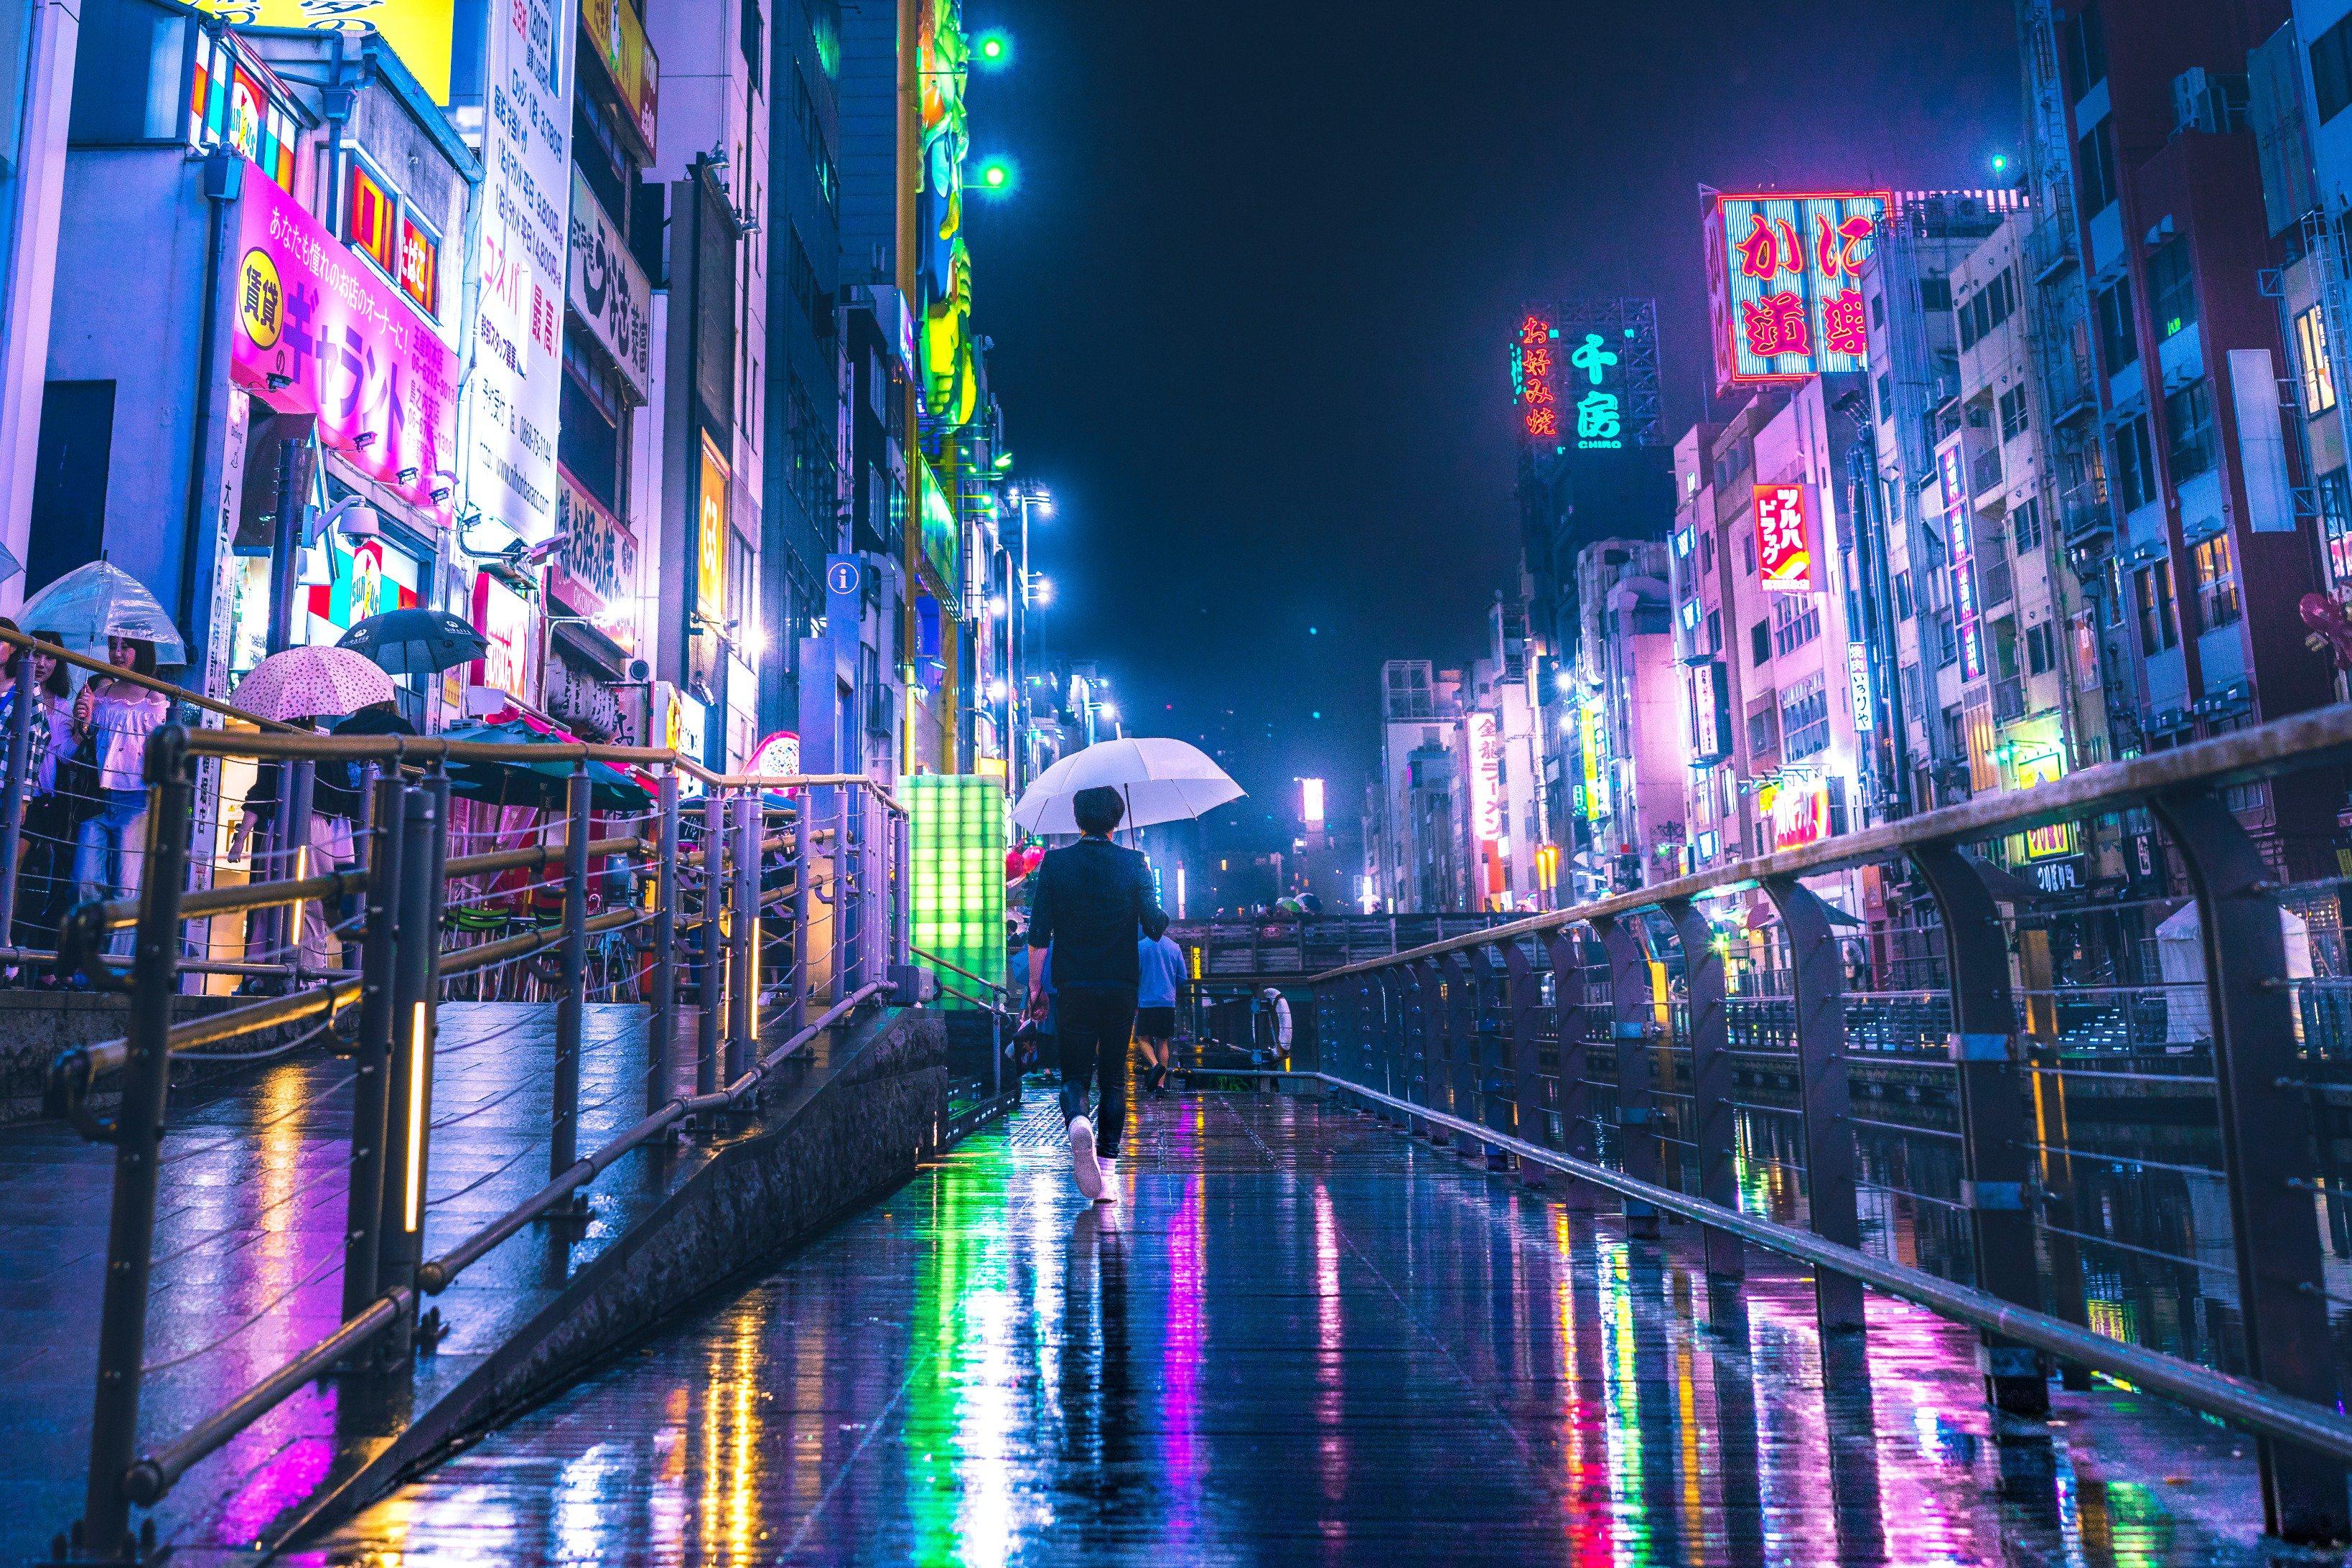 Osaka under the rain [3276x2184]